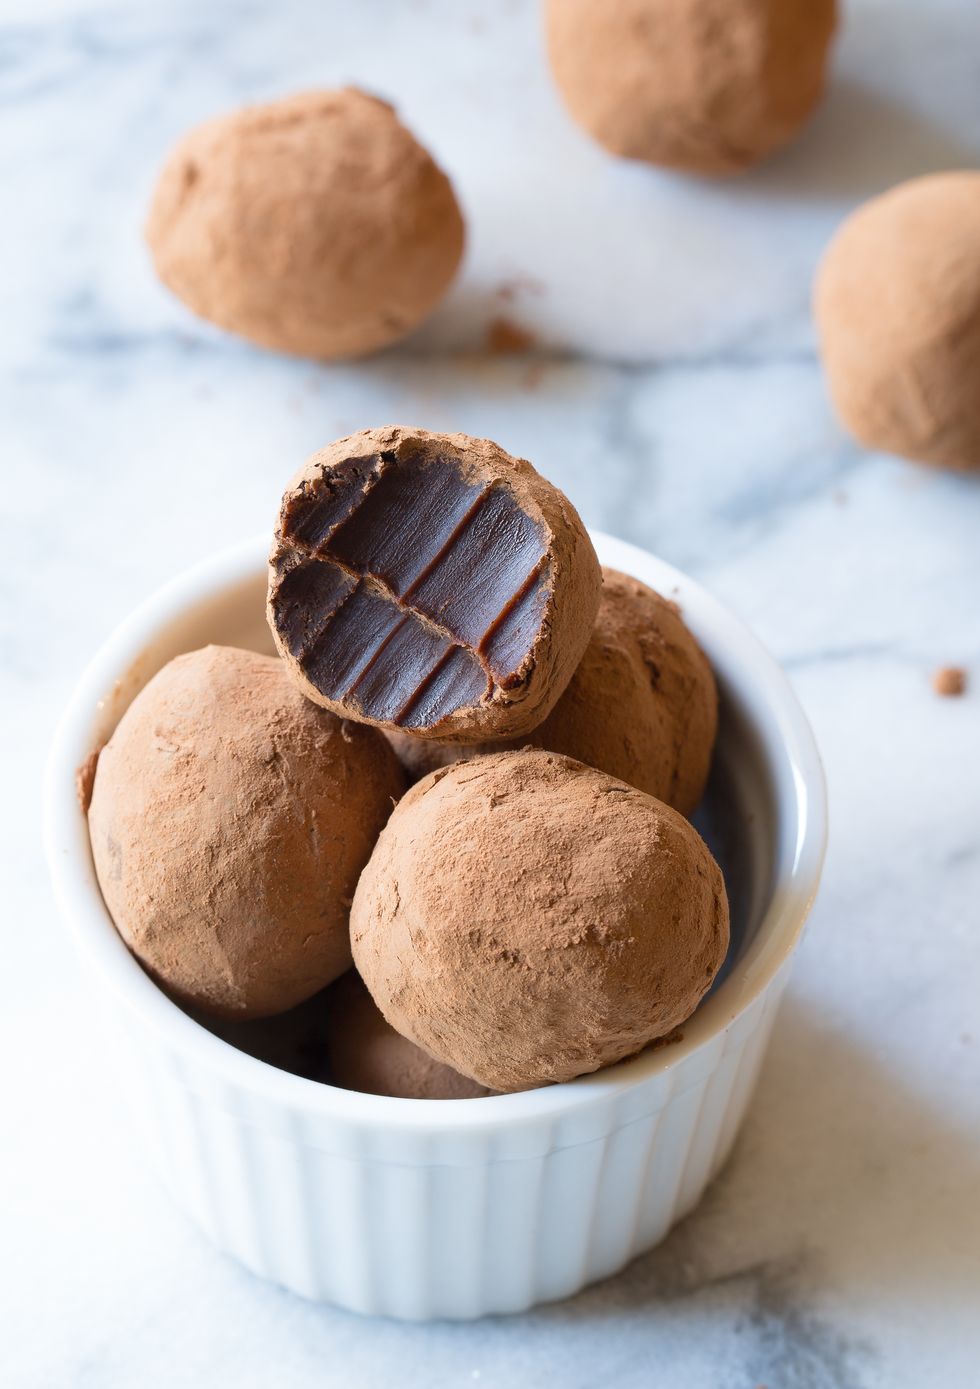 How to Make Simple Chocolate Truffles